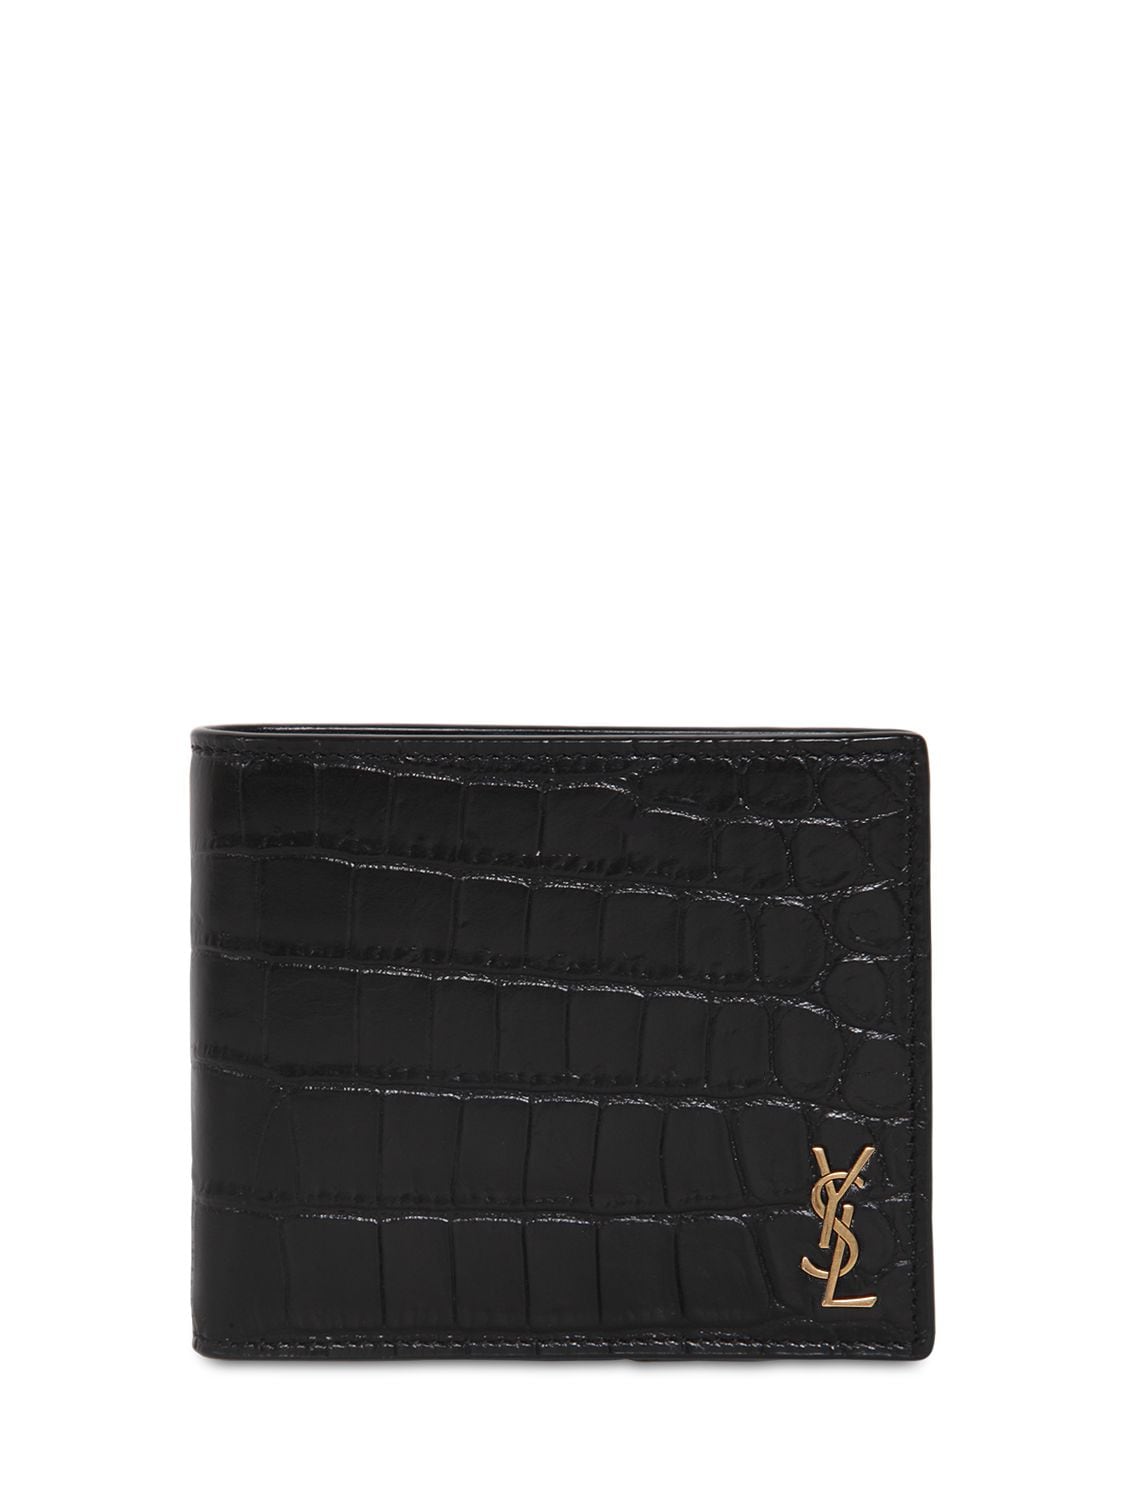 Image of Croc Embossed Leather Billfold Wallet